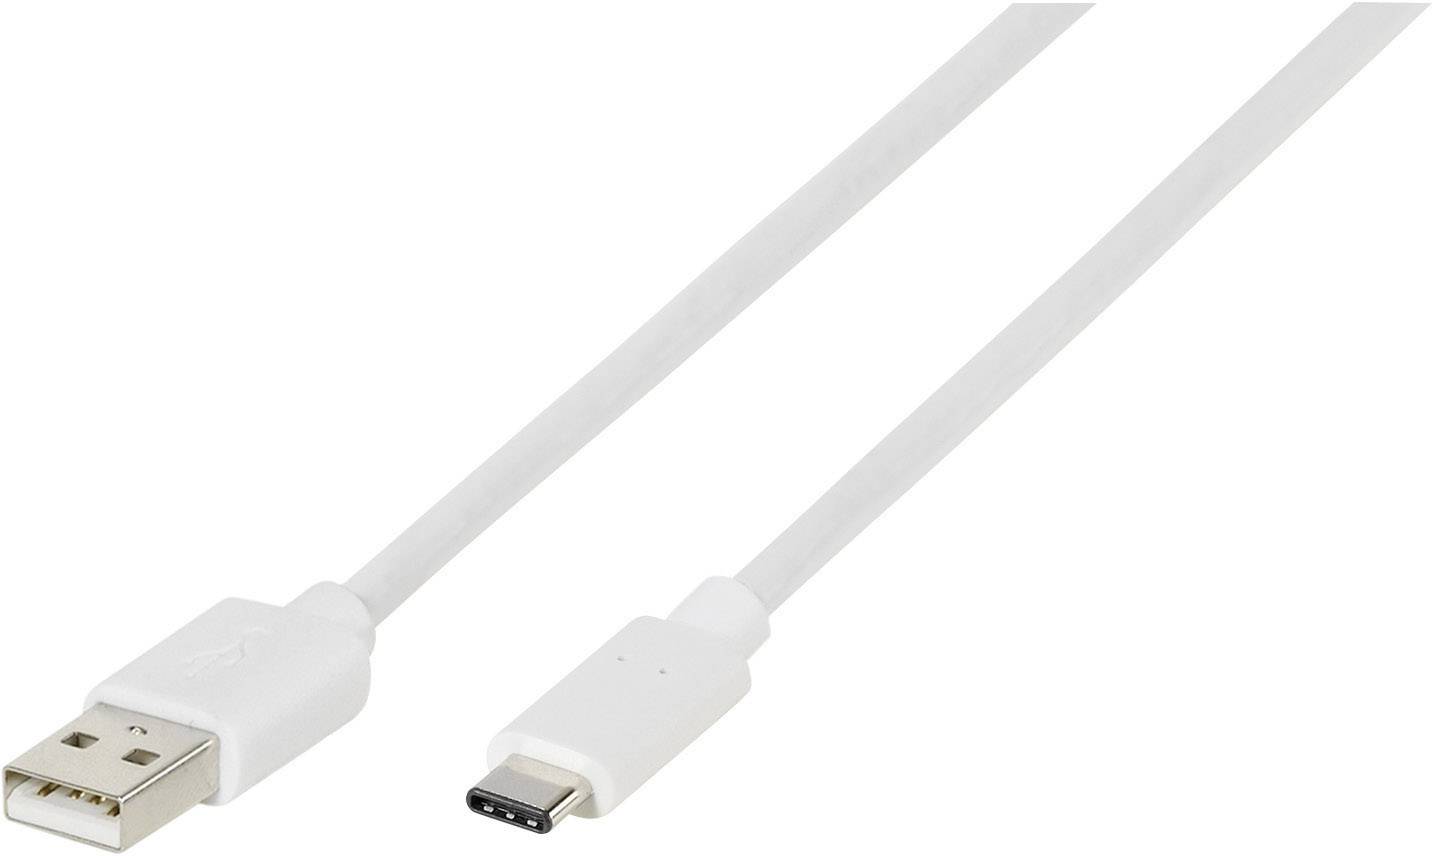 VIVANCO USB 2.0 Anschlusskabel [1x USB 2.0 Stecker A - 1x USB-C? Stecker] 2 m Weiß